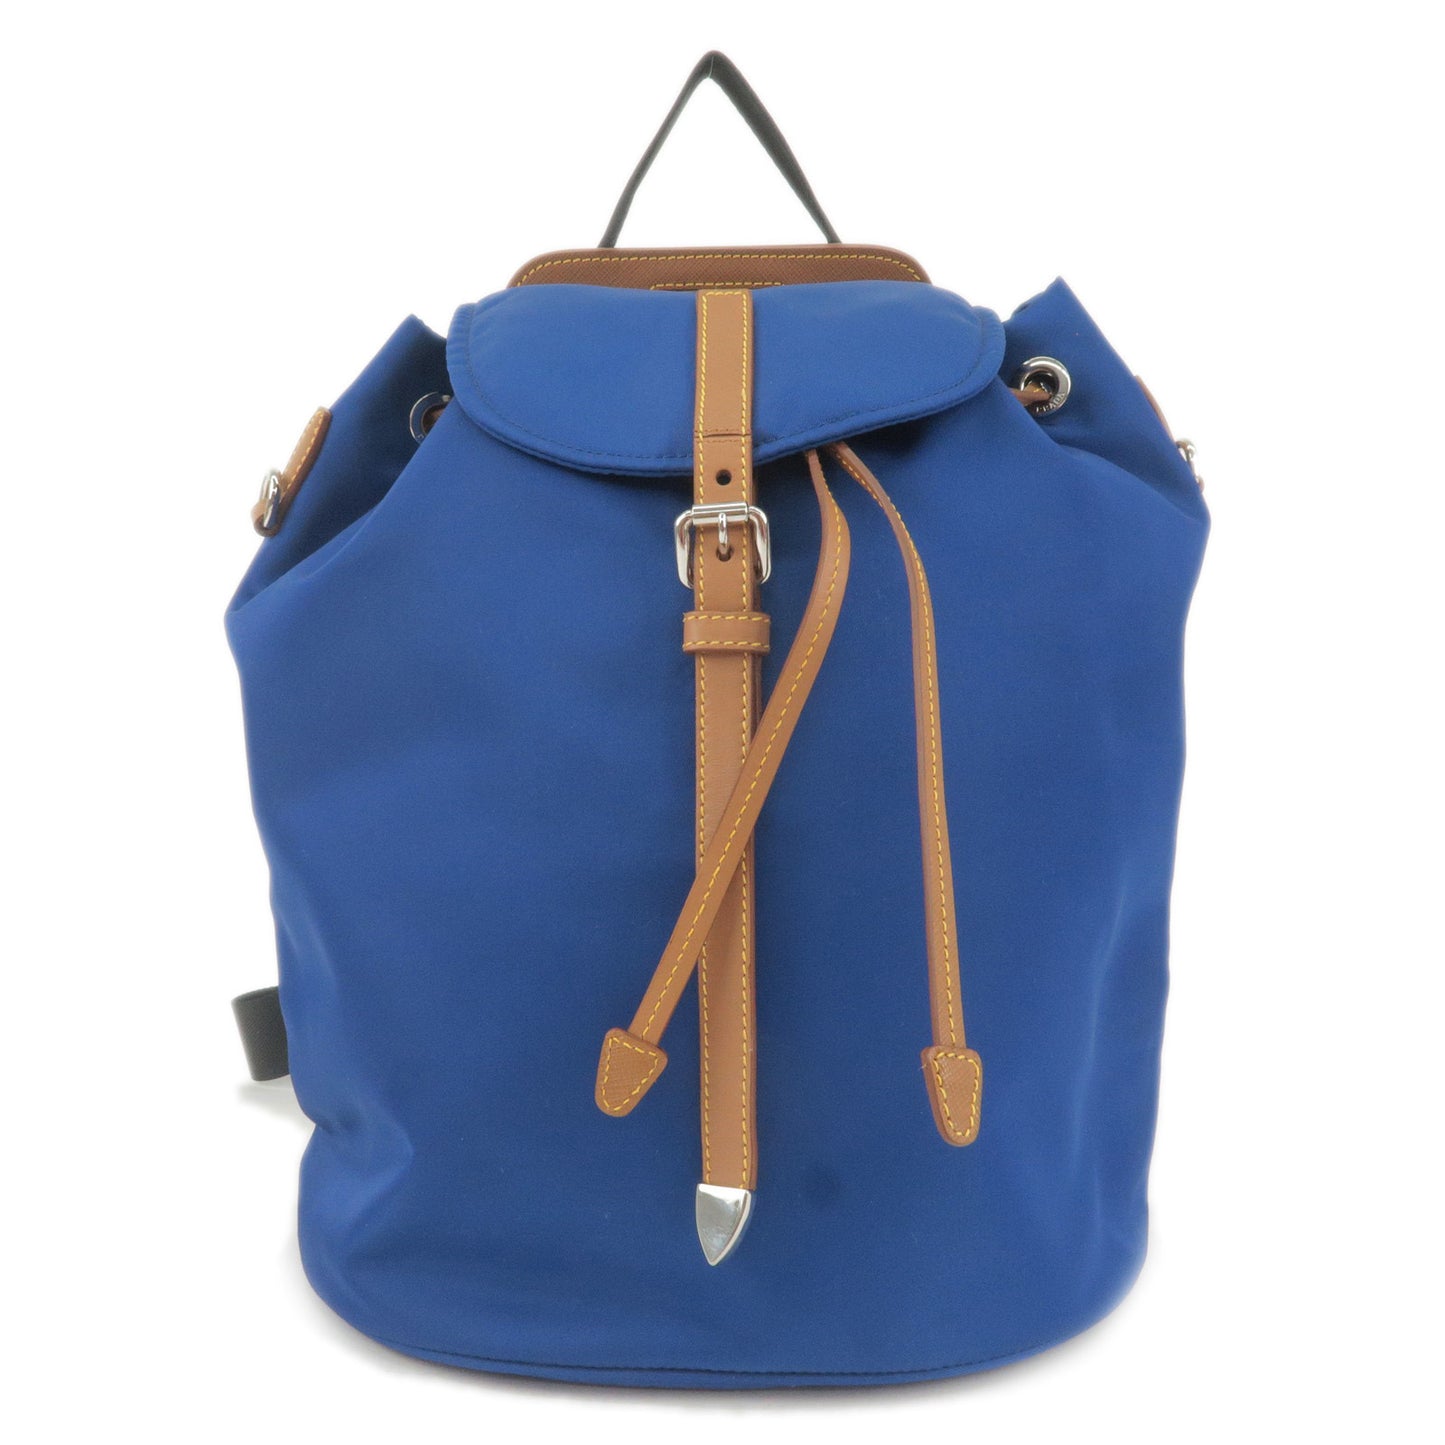 PRADA-Logo-Nylon-Leather-Ruck-Sack-Back-Pack-Bag-Blue-Brown-1BZ064